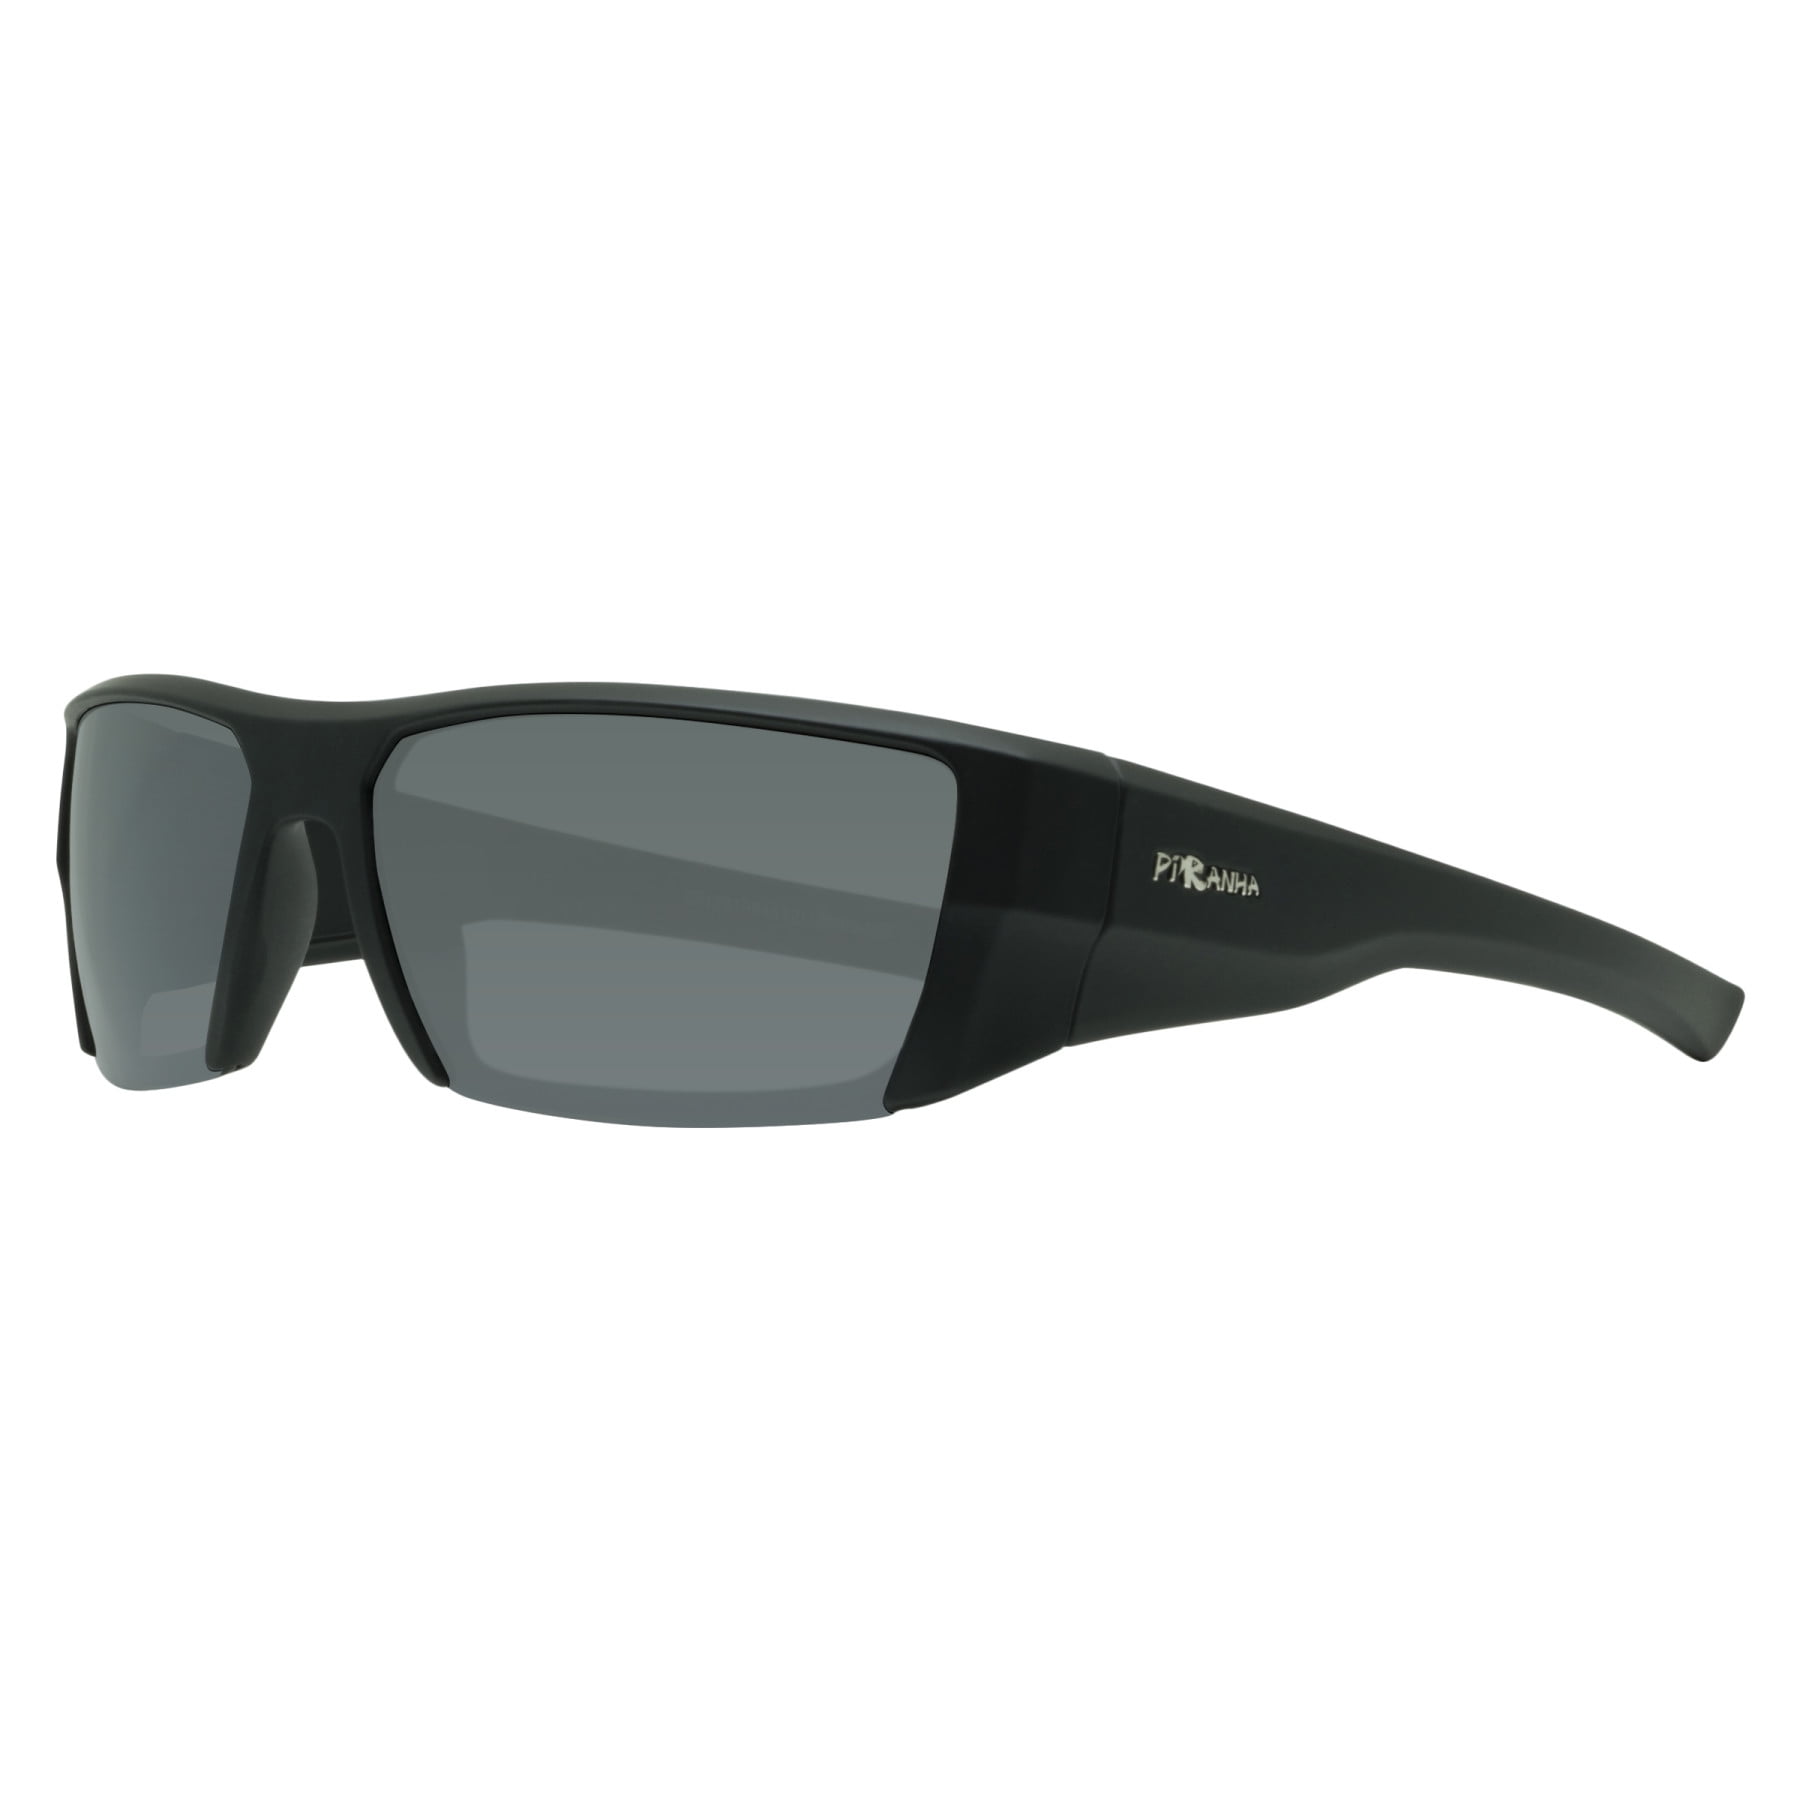 Piranha Titan Rubber Finished Black Frame Sunglasses with Smoke